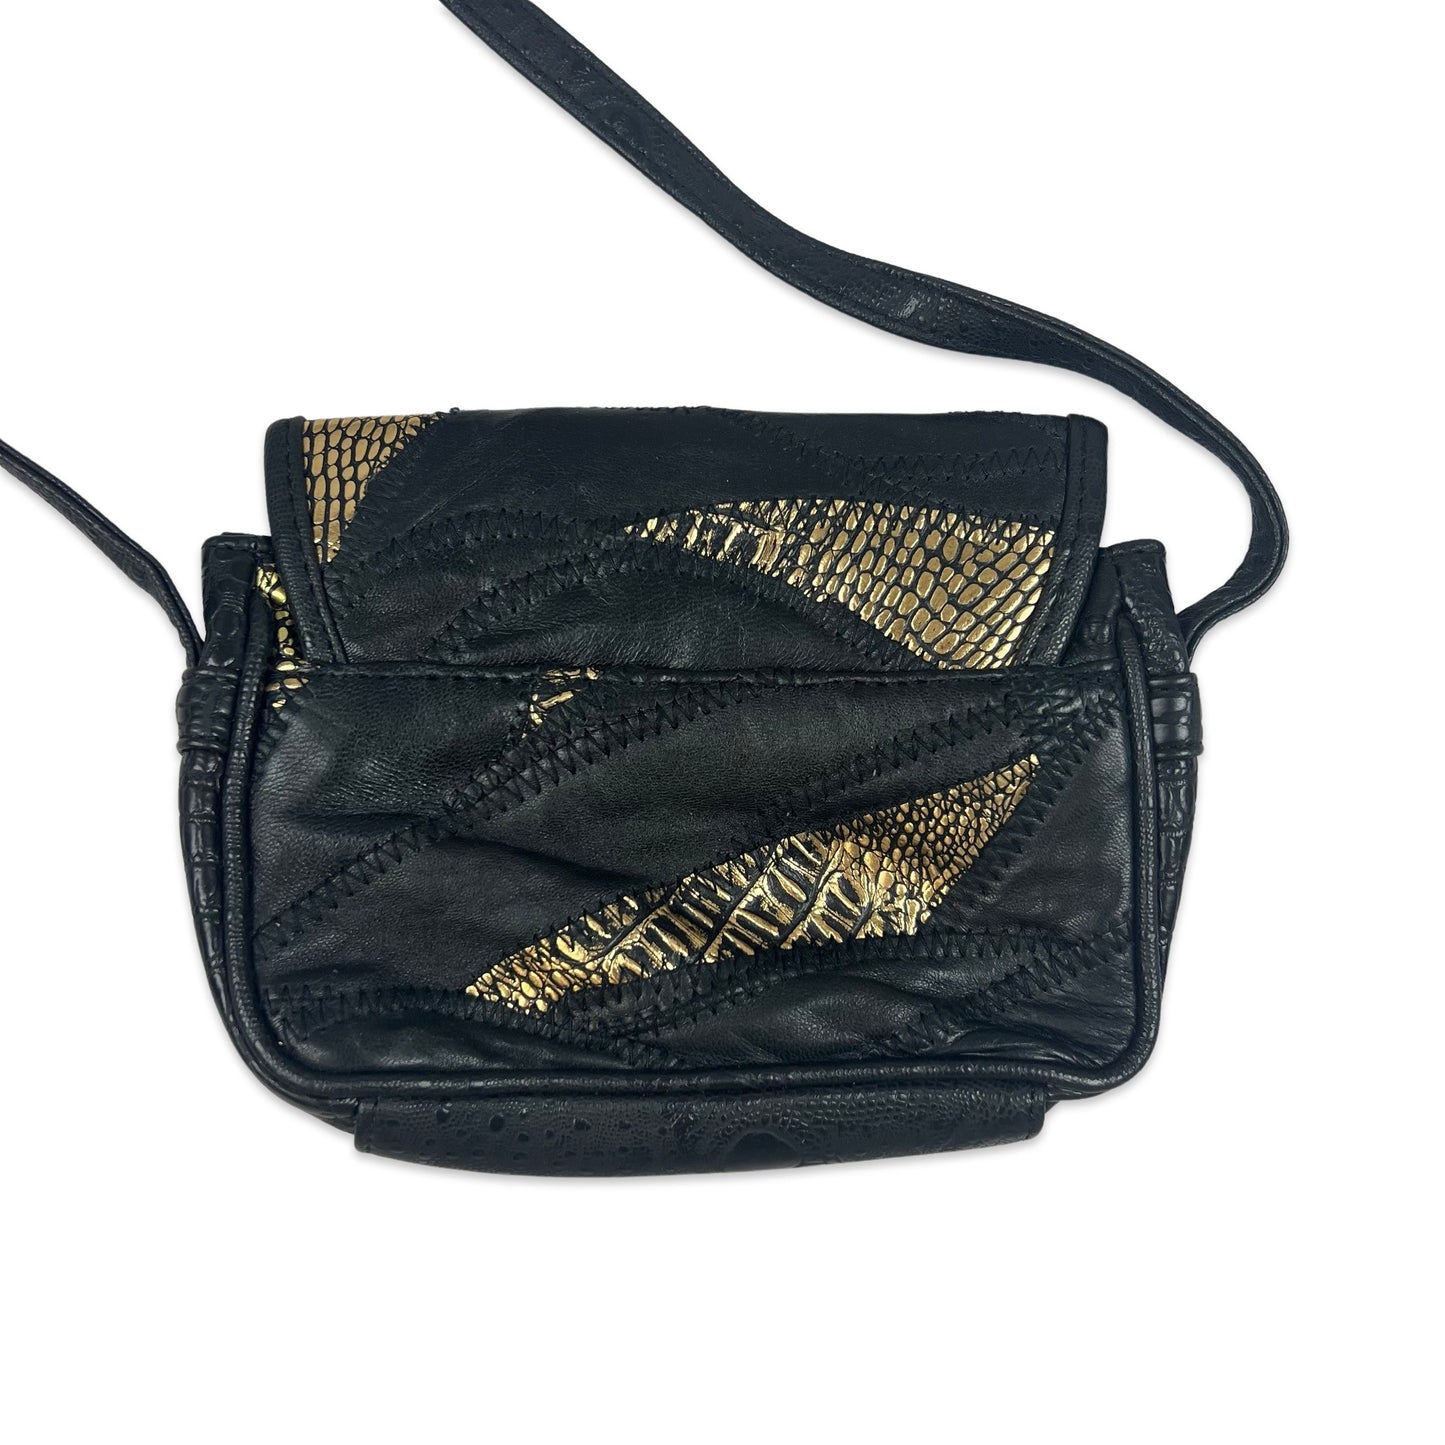 Vintage Patchwork Croc Crossbody Small Leather Handbag Black Gold